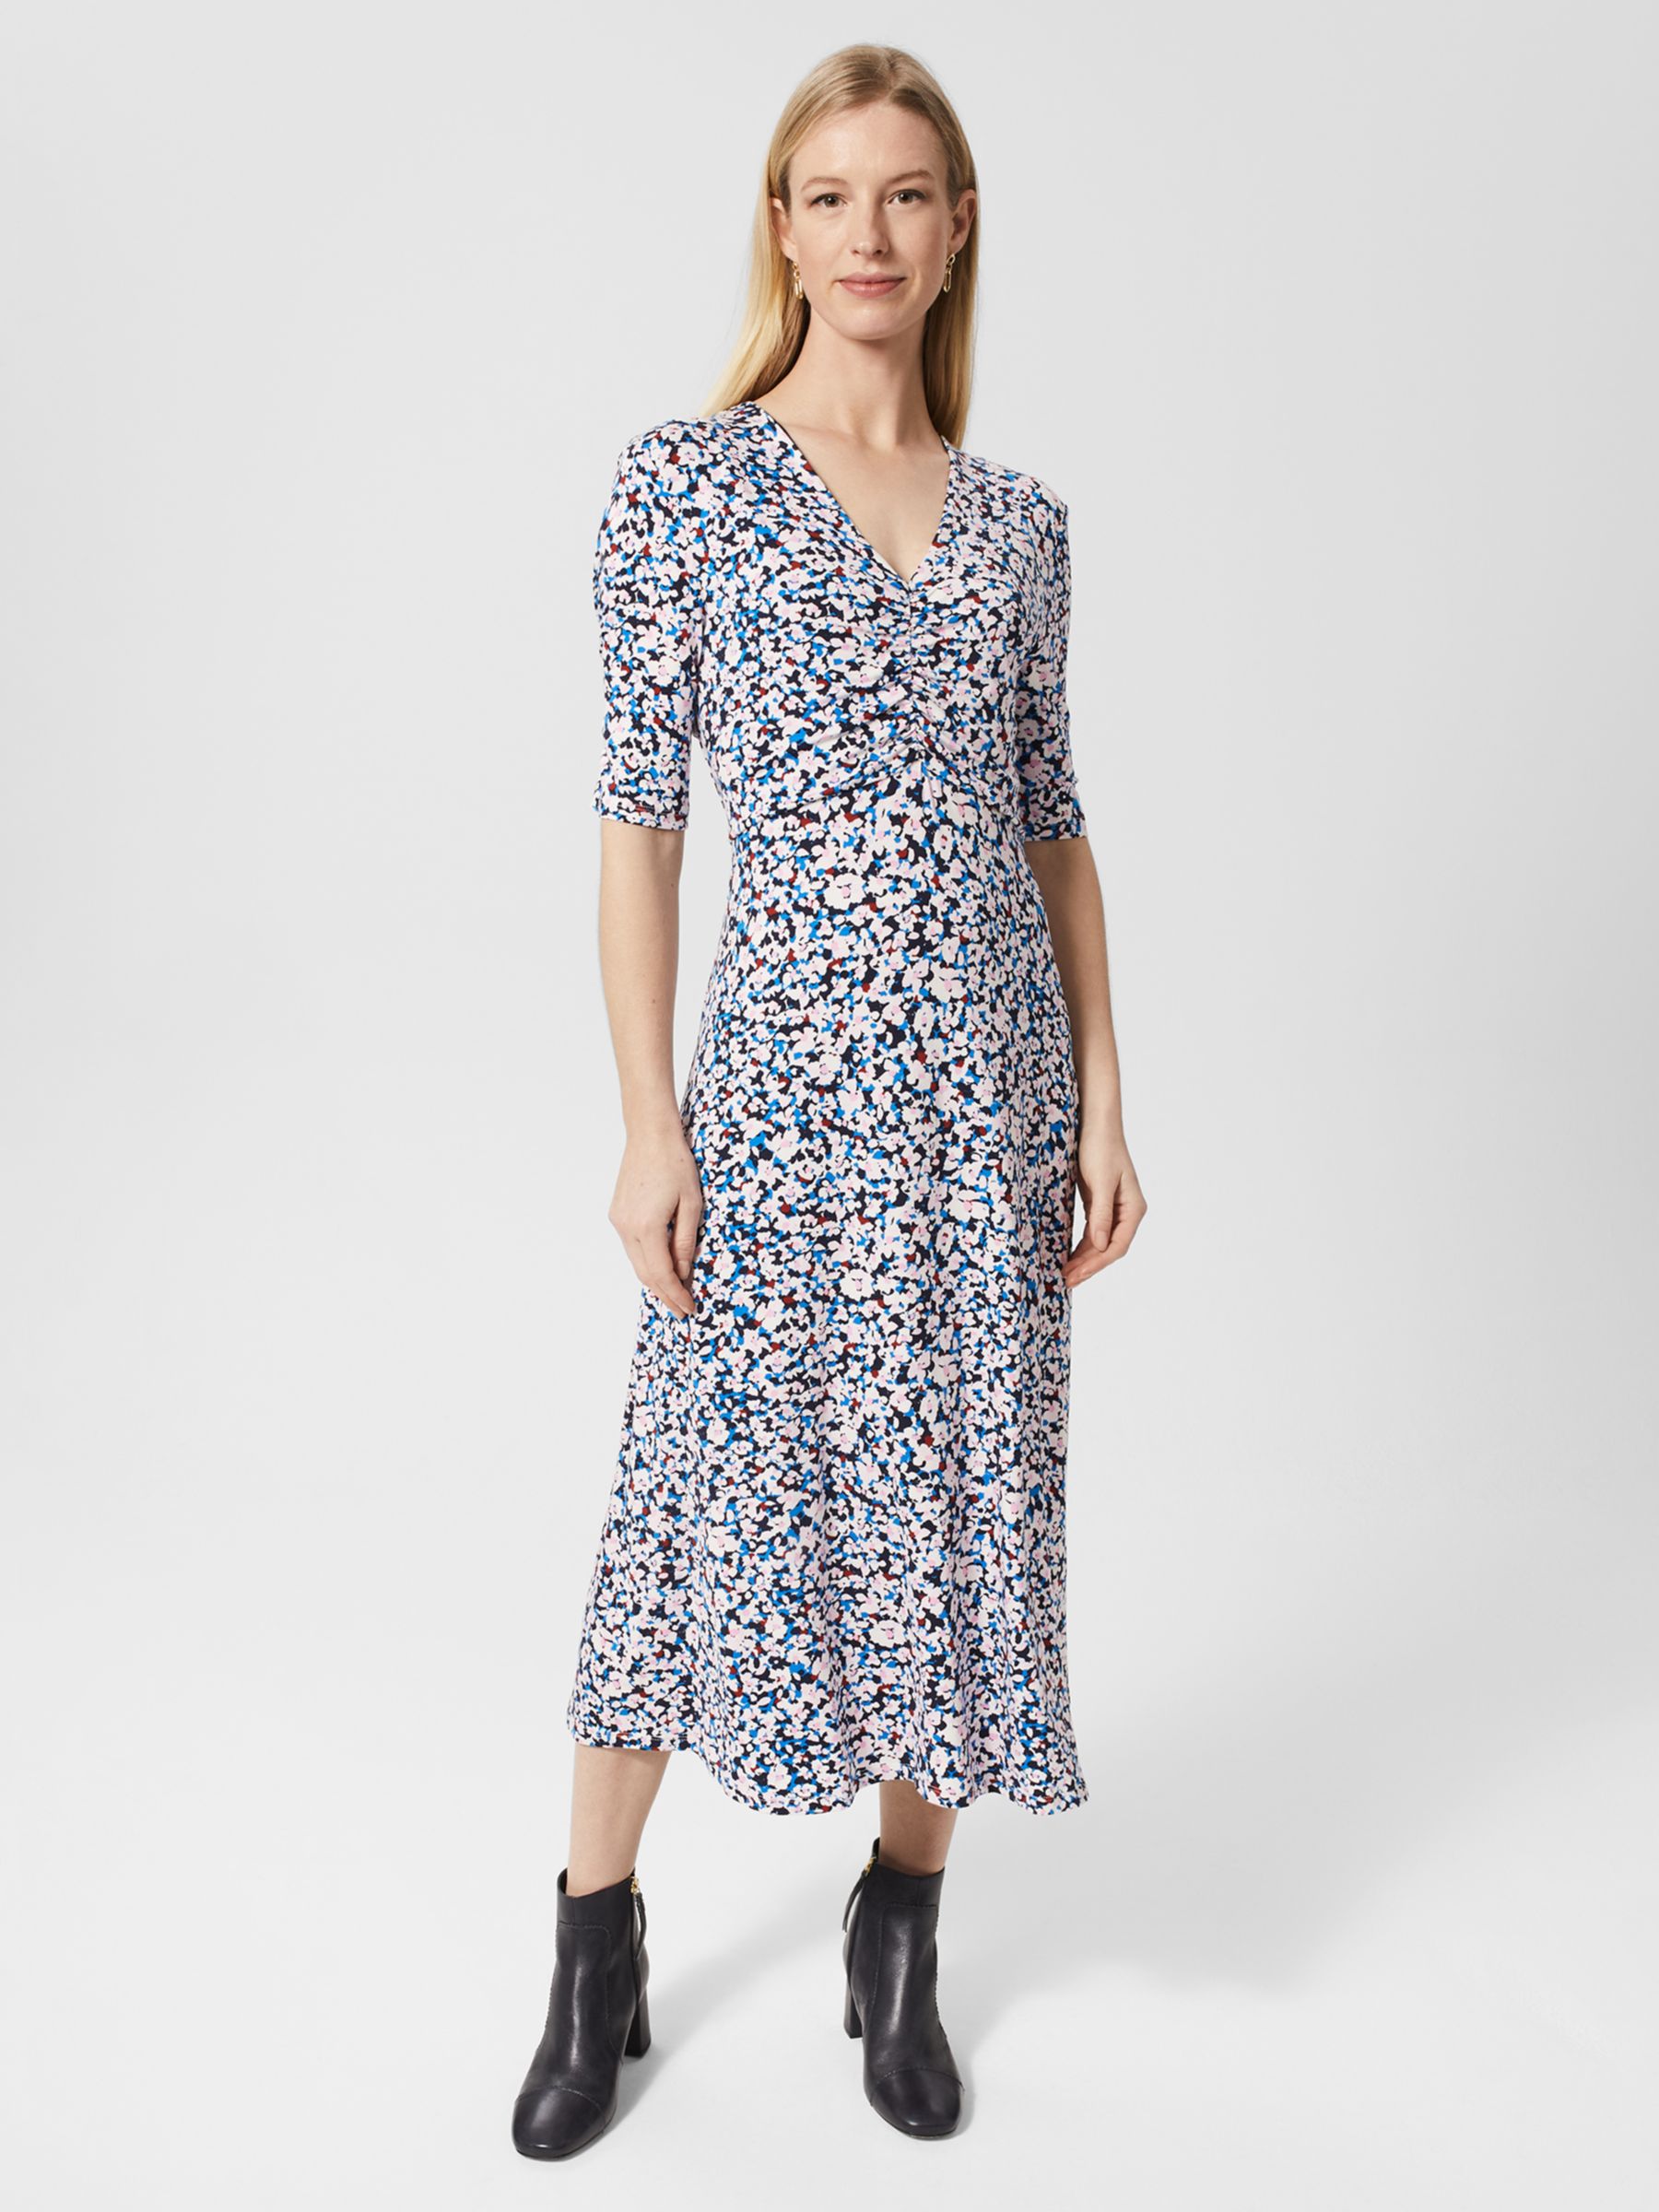 Hobbs Frankie Floral Print Midi Dress, Navy/Multi at John Lewis & Partners